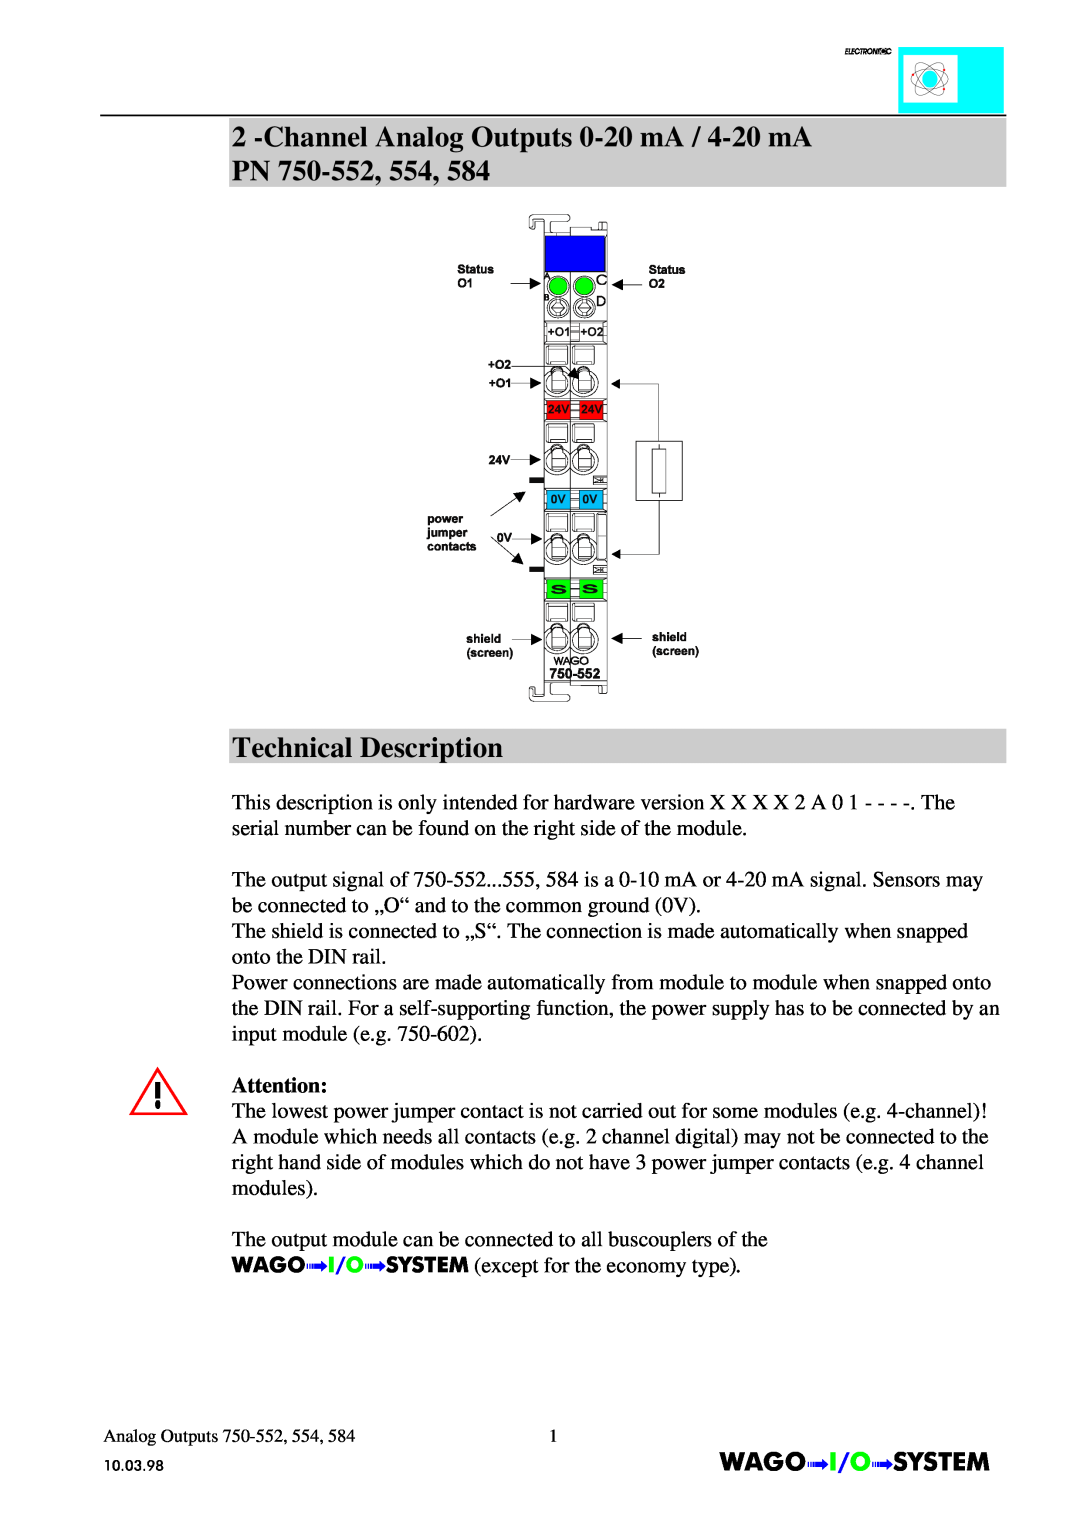 Quatech INTERBUS S manual Channel Analog Outputs 0-20 mA / 4-20 mA PN 750-552, 554, Technical Description 